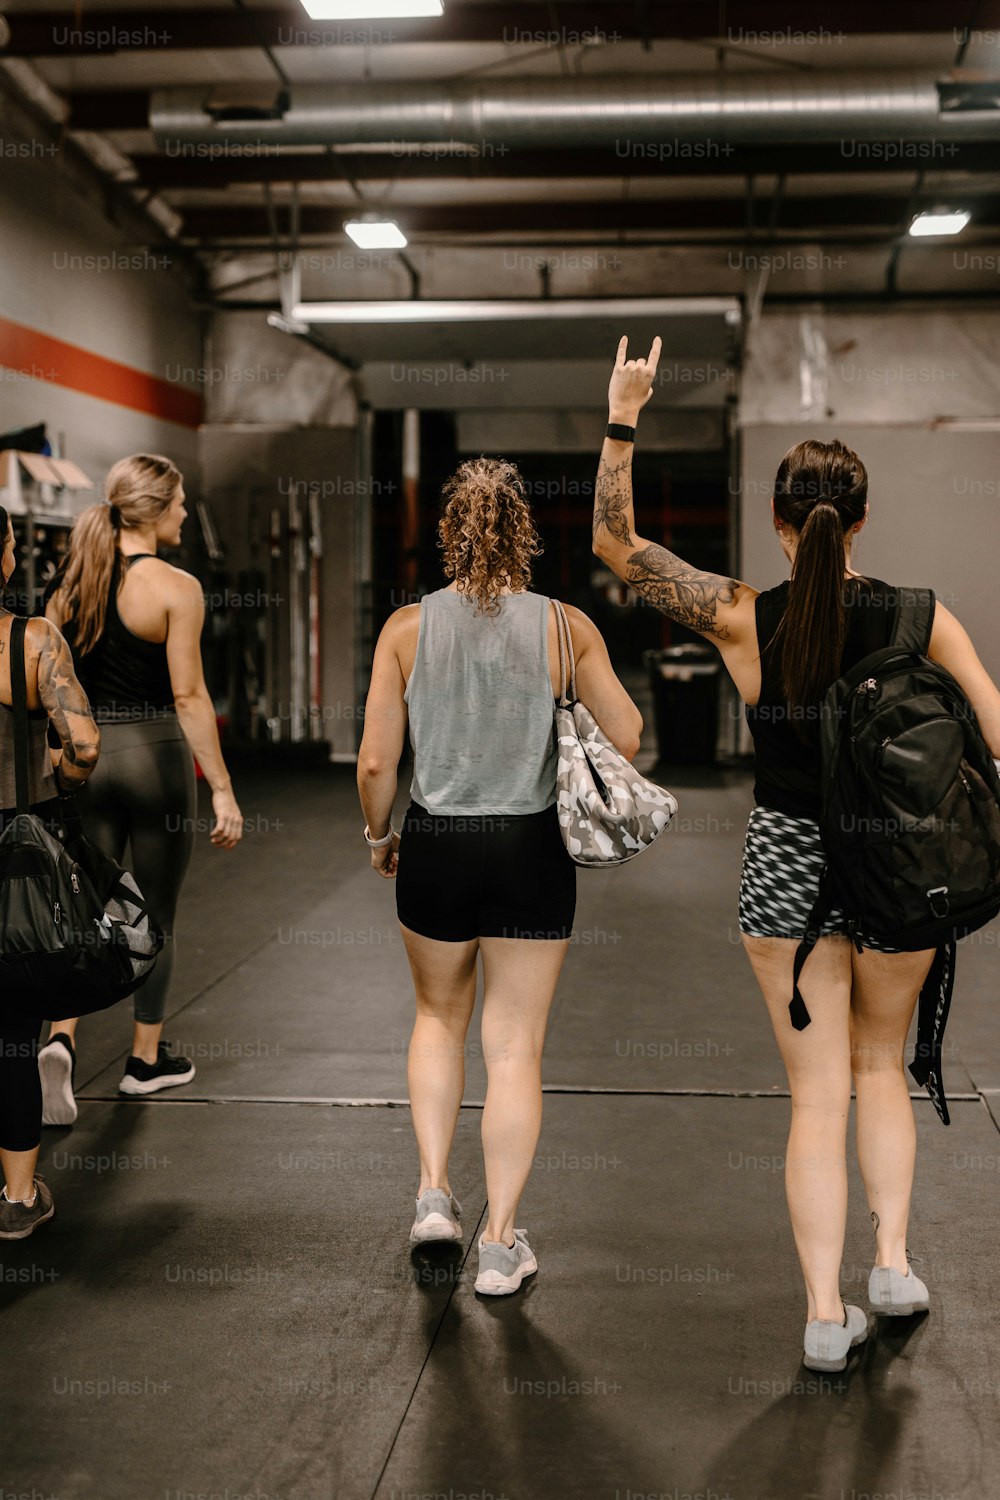 a group of women walking through a gym